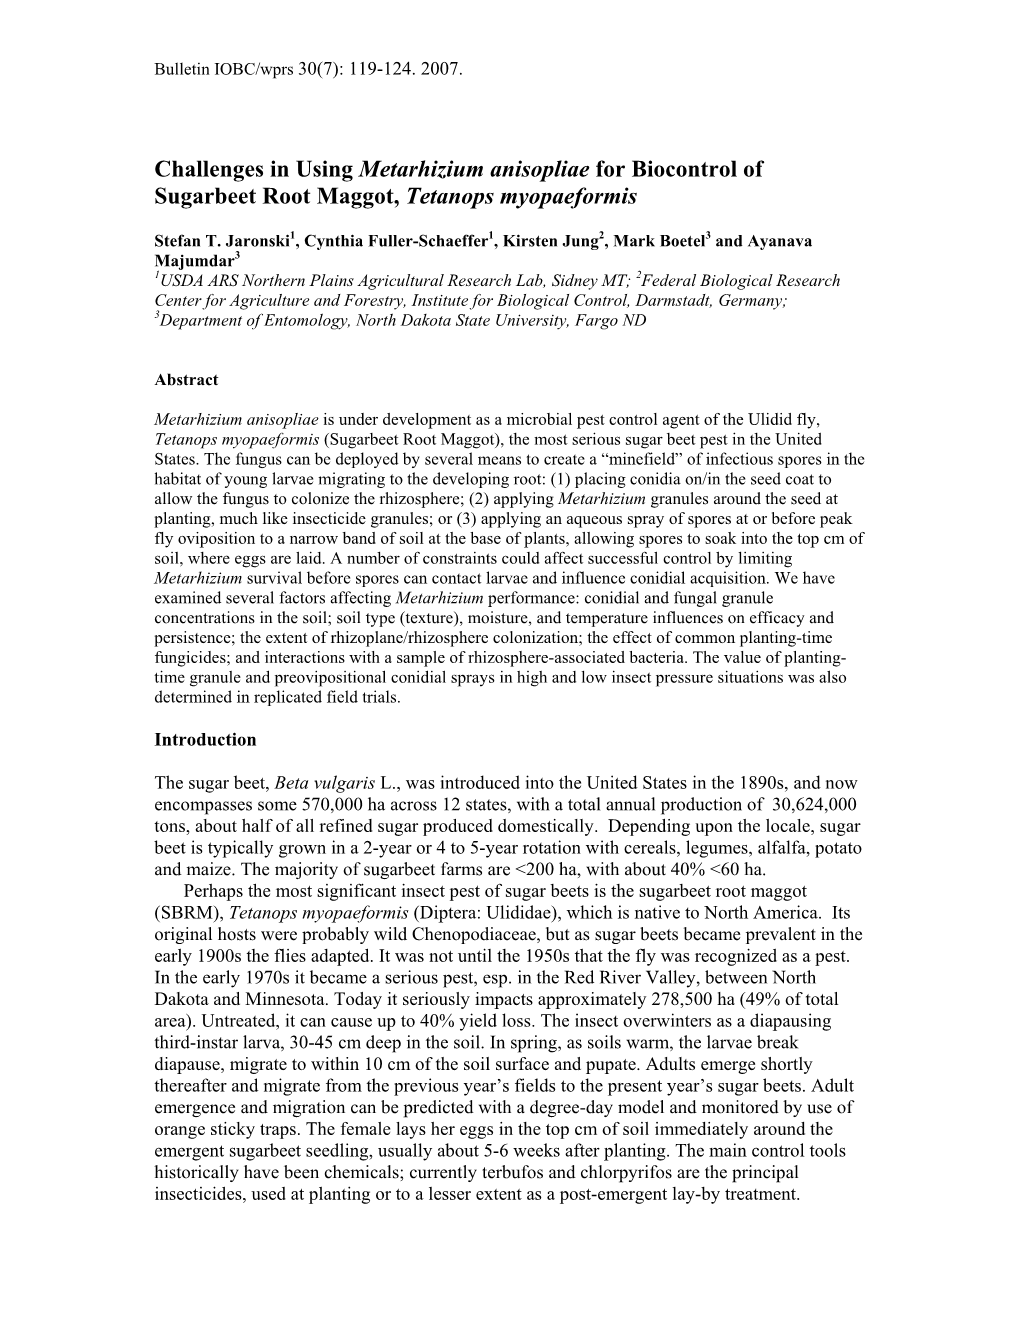 Challenges in Using Metarhizium Anisopliae for Biocontrol of Sugarbeet Root Maggot, Tetanops Myopaeformis